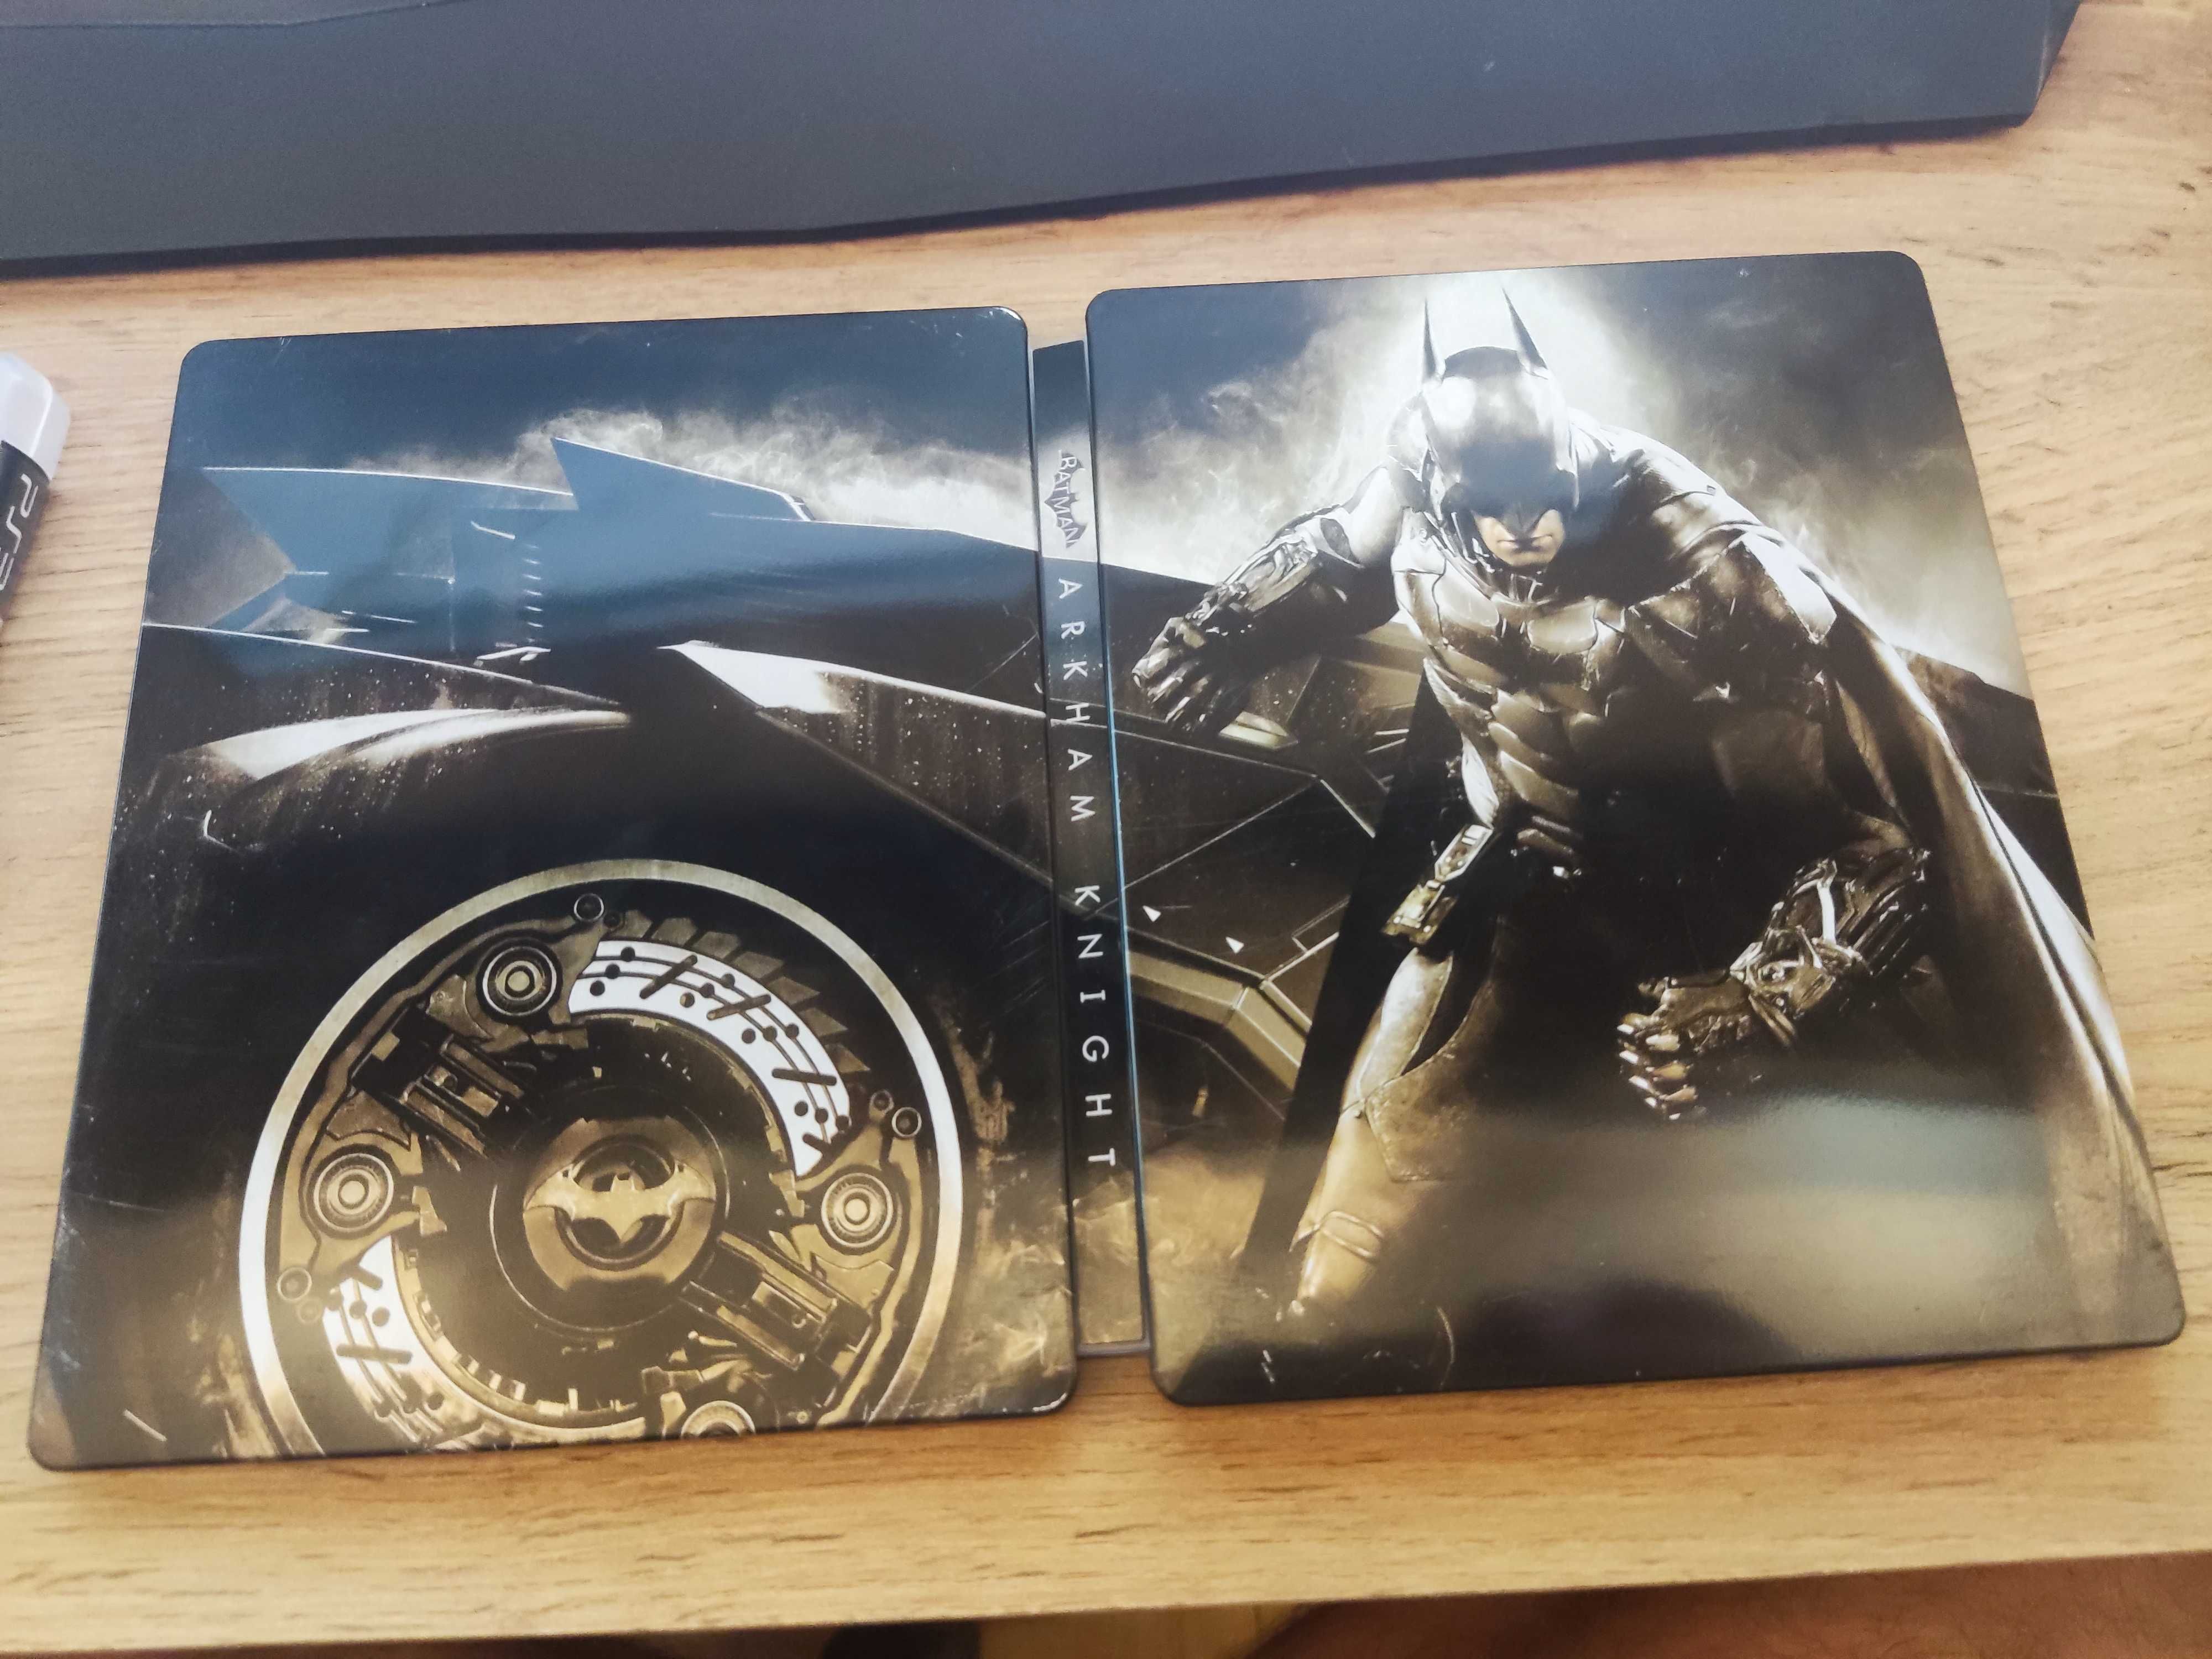 Batman Arkham Knight Steelbook Playstation 3 PS3